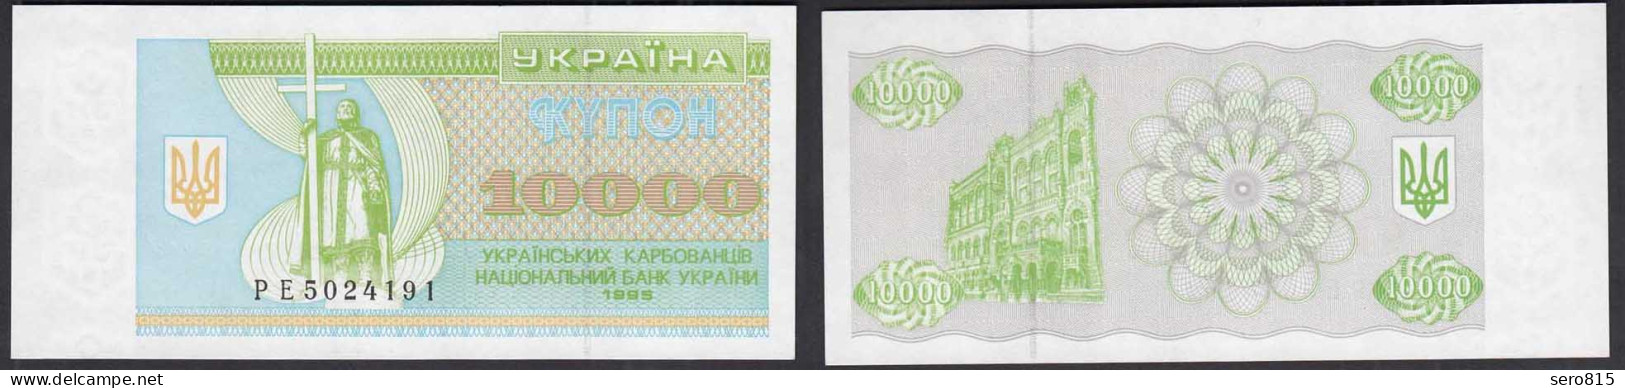 UKRAINE 10000 10.000 Karbovantsiv 1995 Pick 94b UNC (1)    (32005 - Ukraine